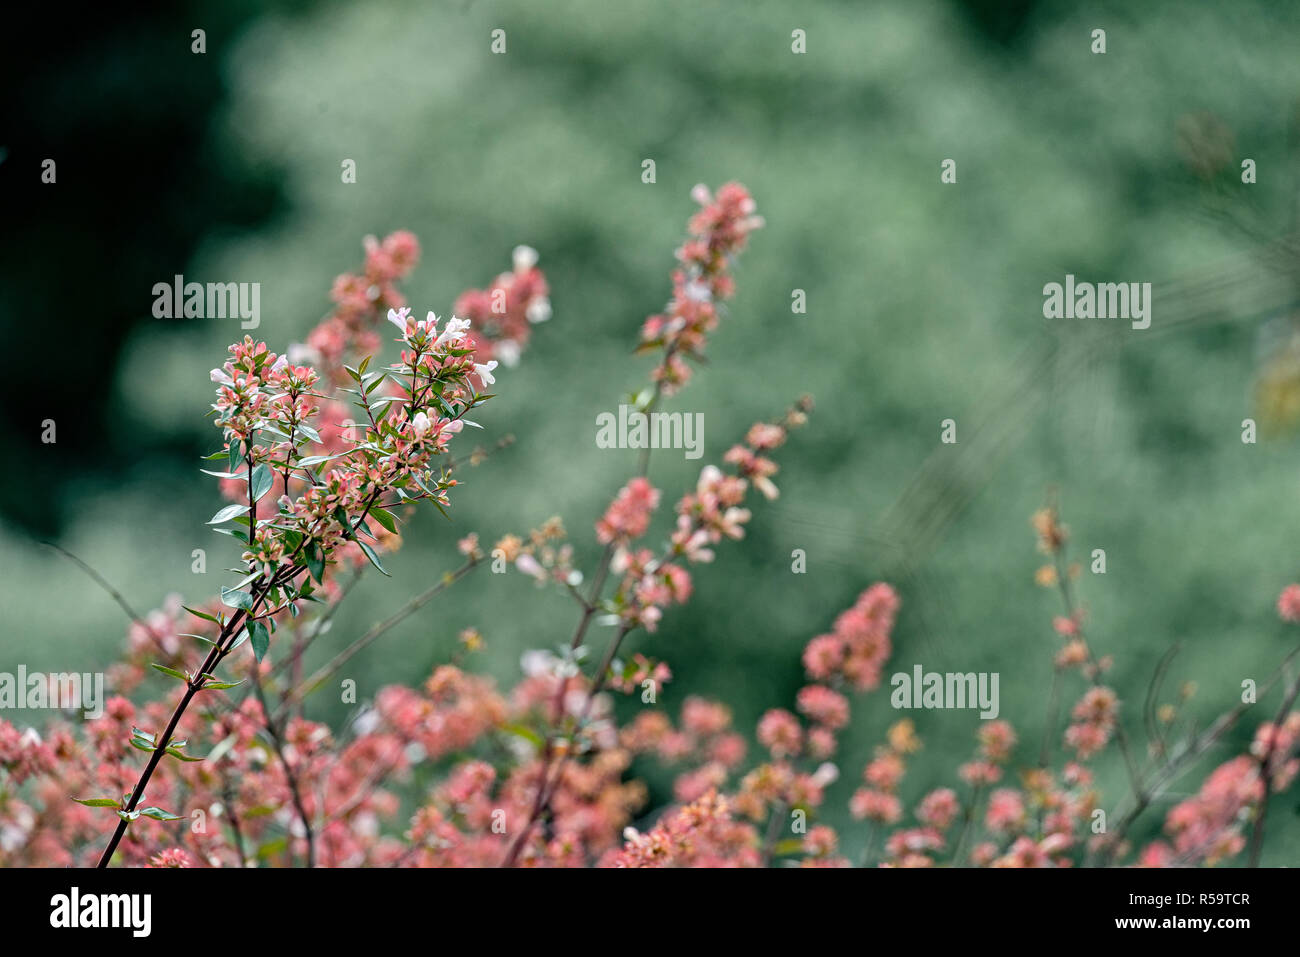 Delicate pink flowers on garden shrub in autumn Stock Photo